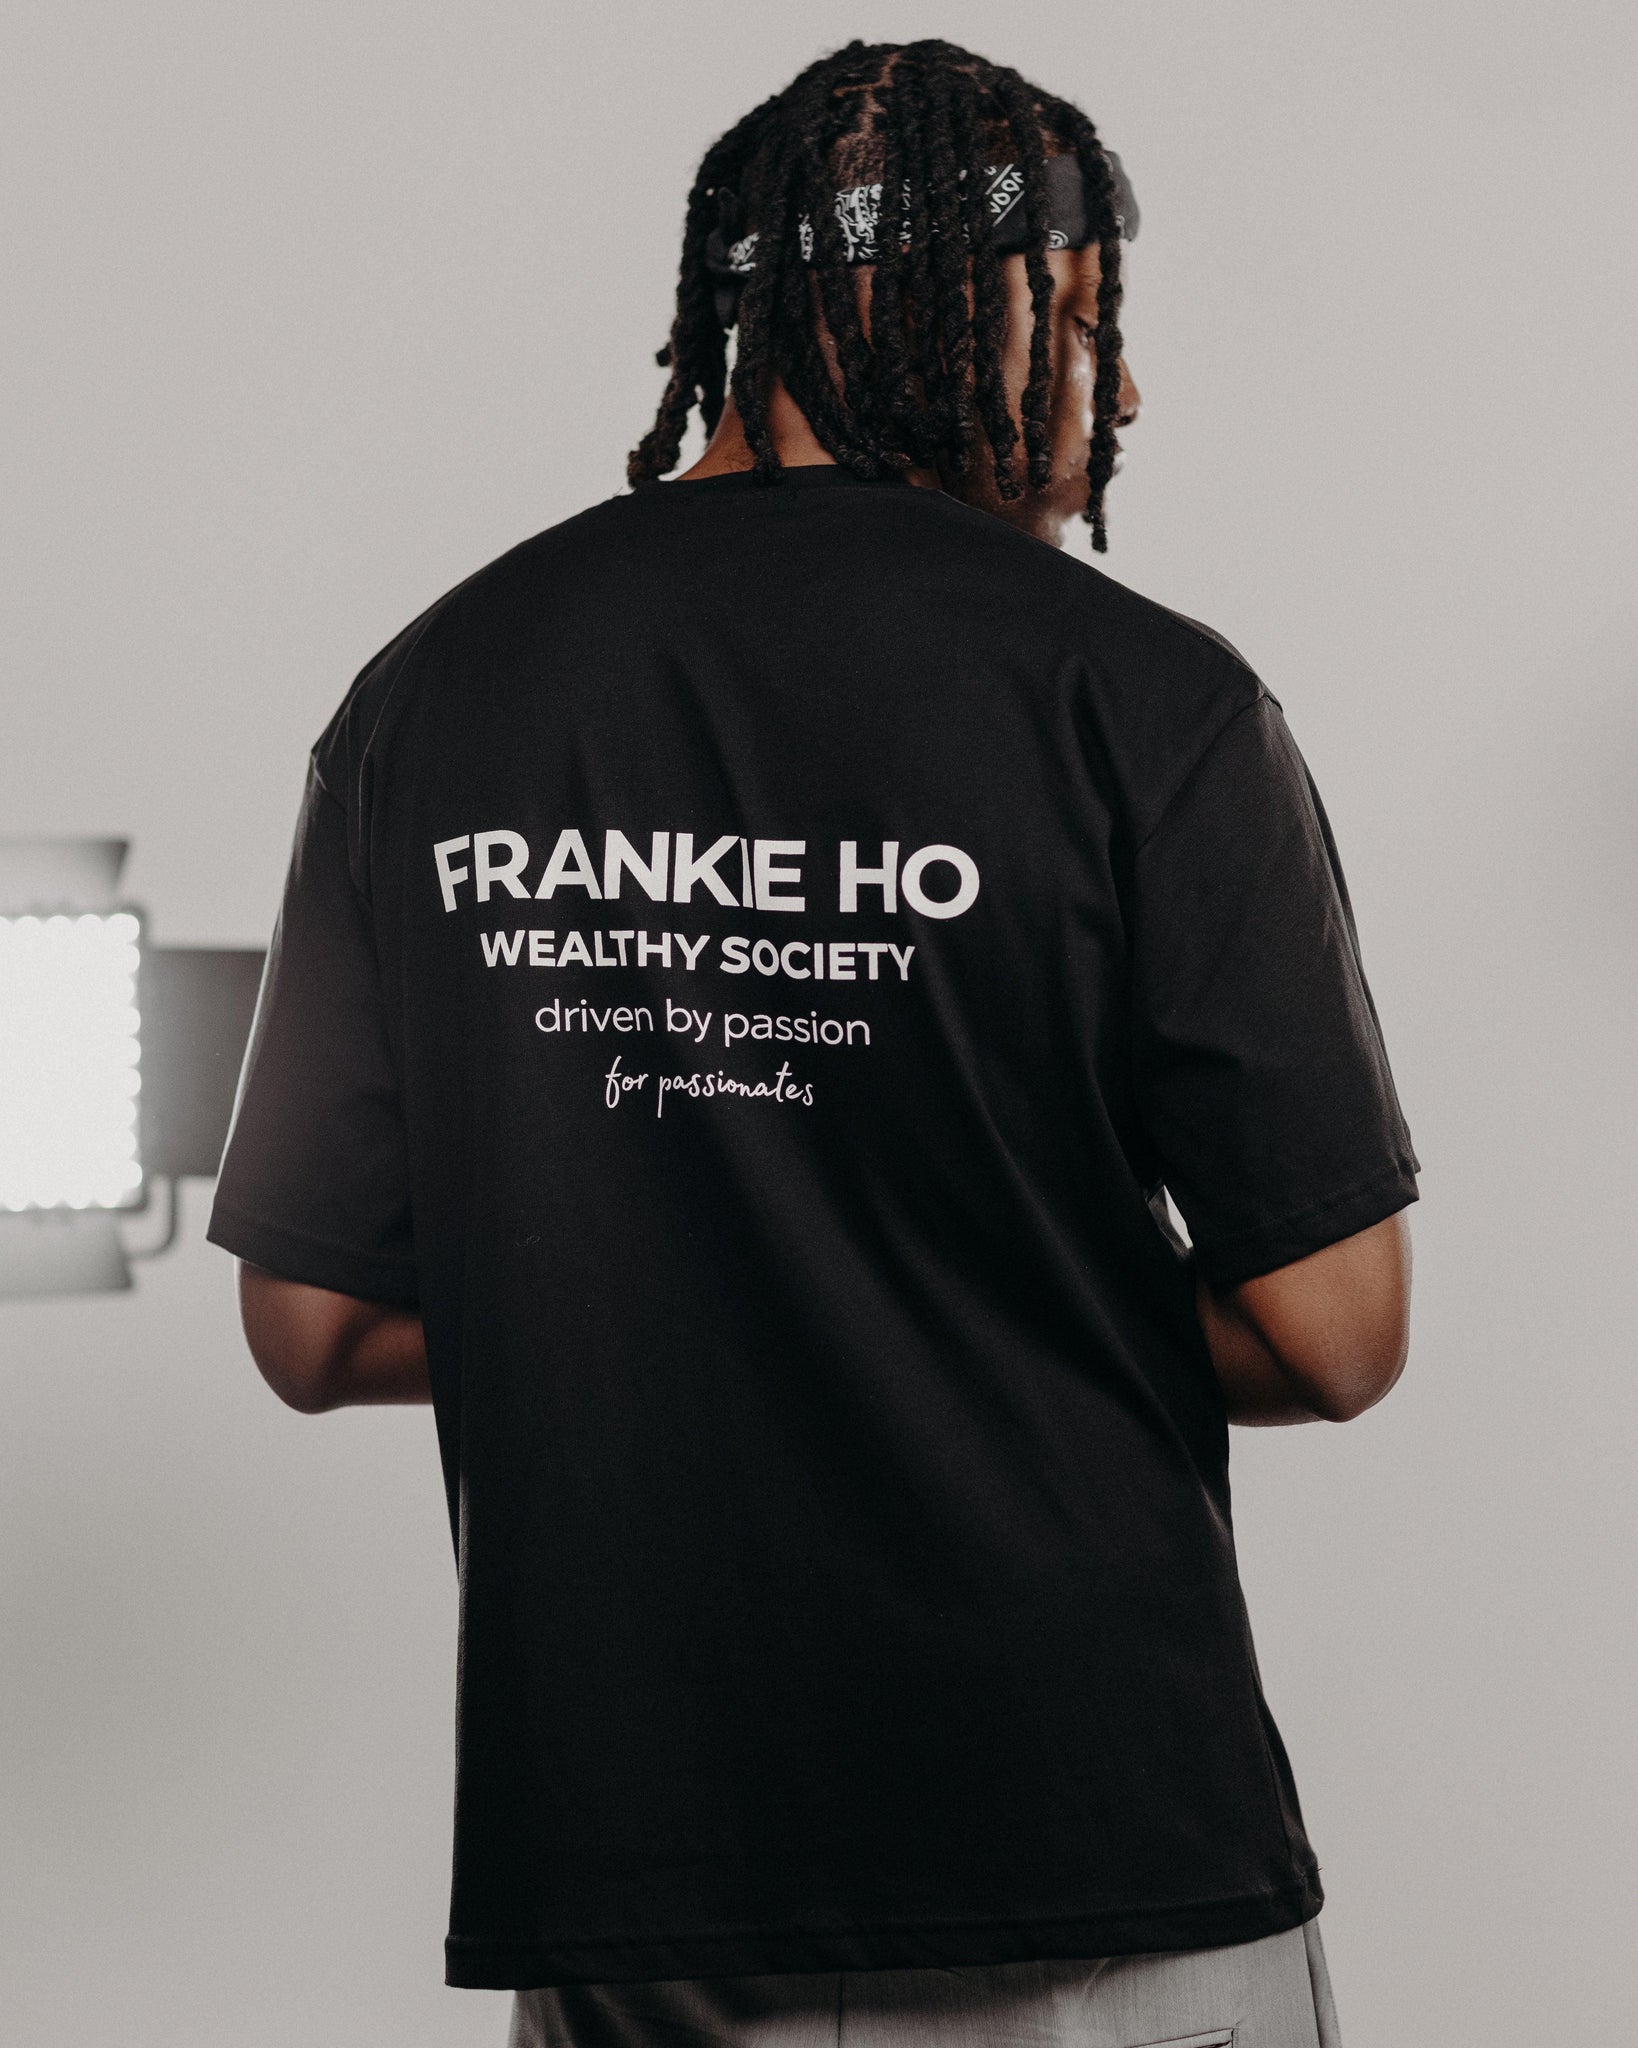 T-shirt Wealthy Society - FRANKIE HO